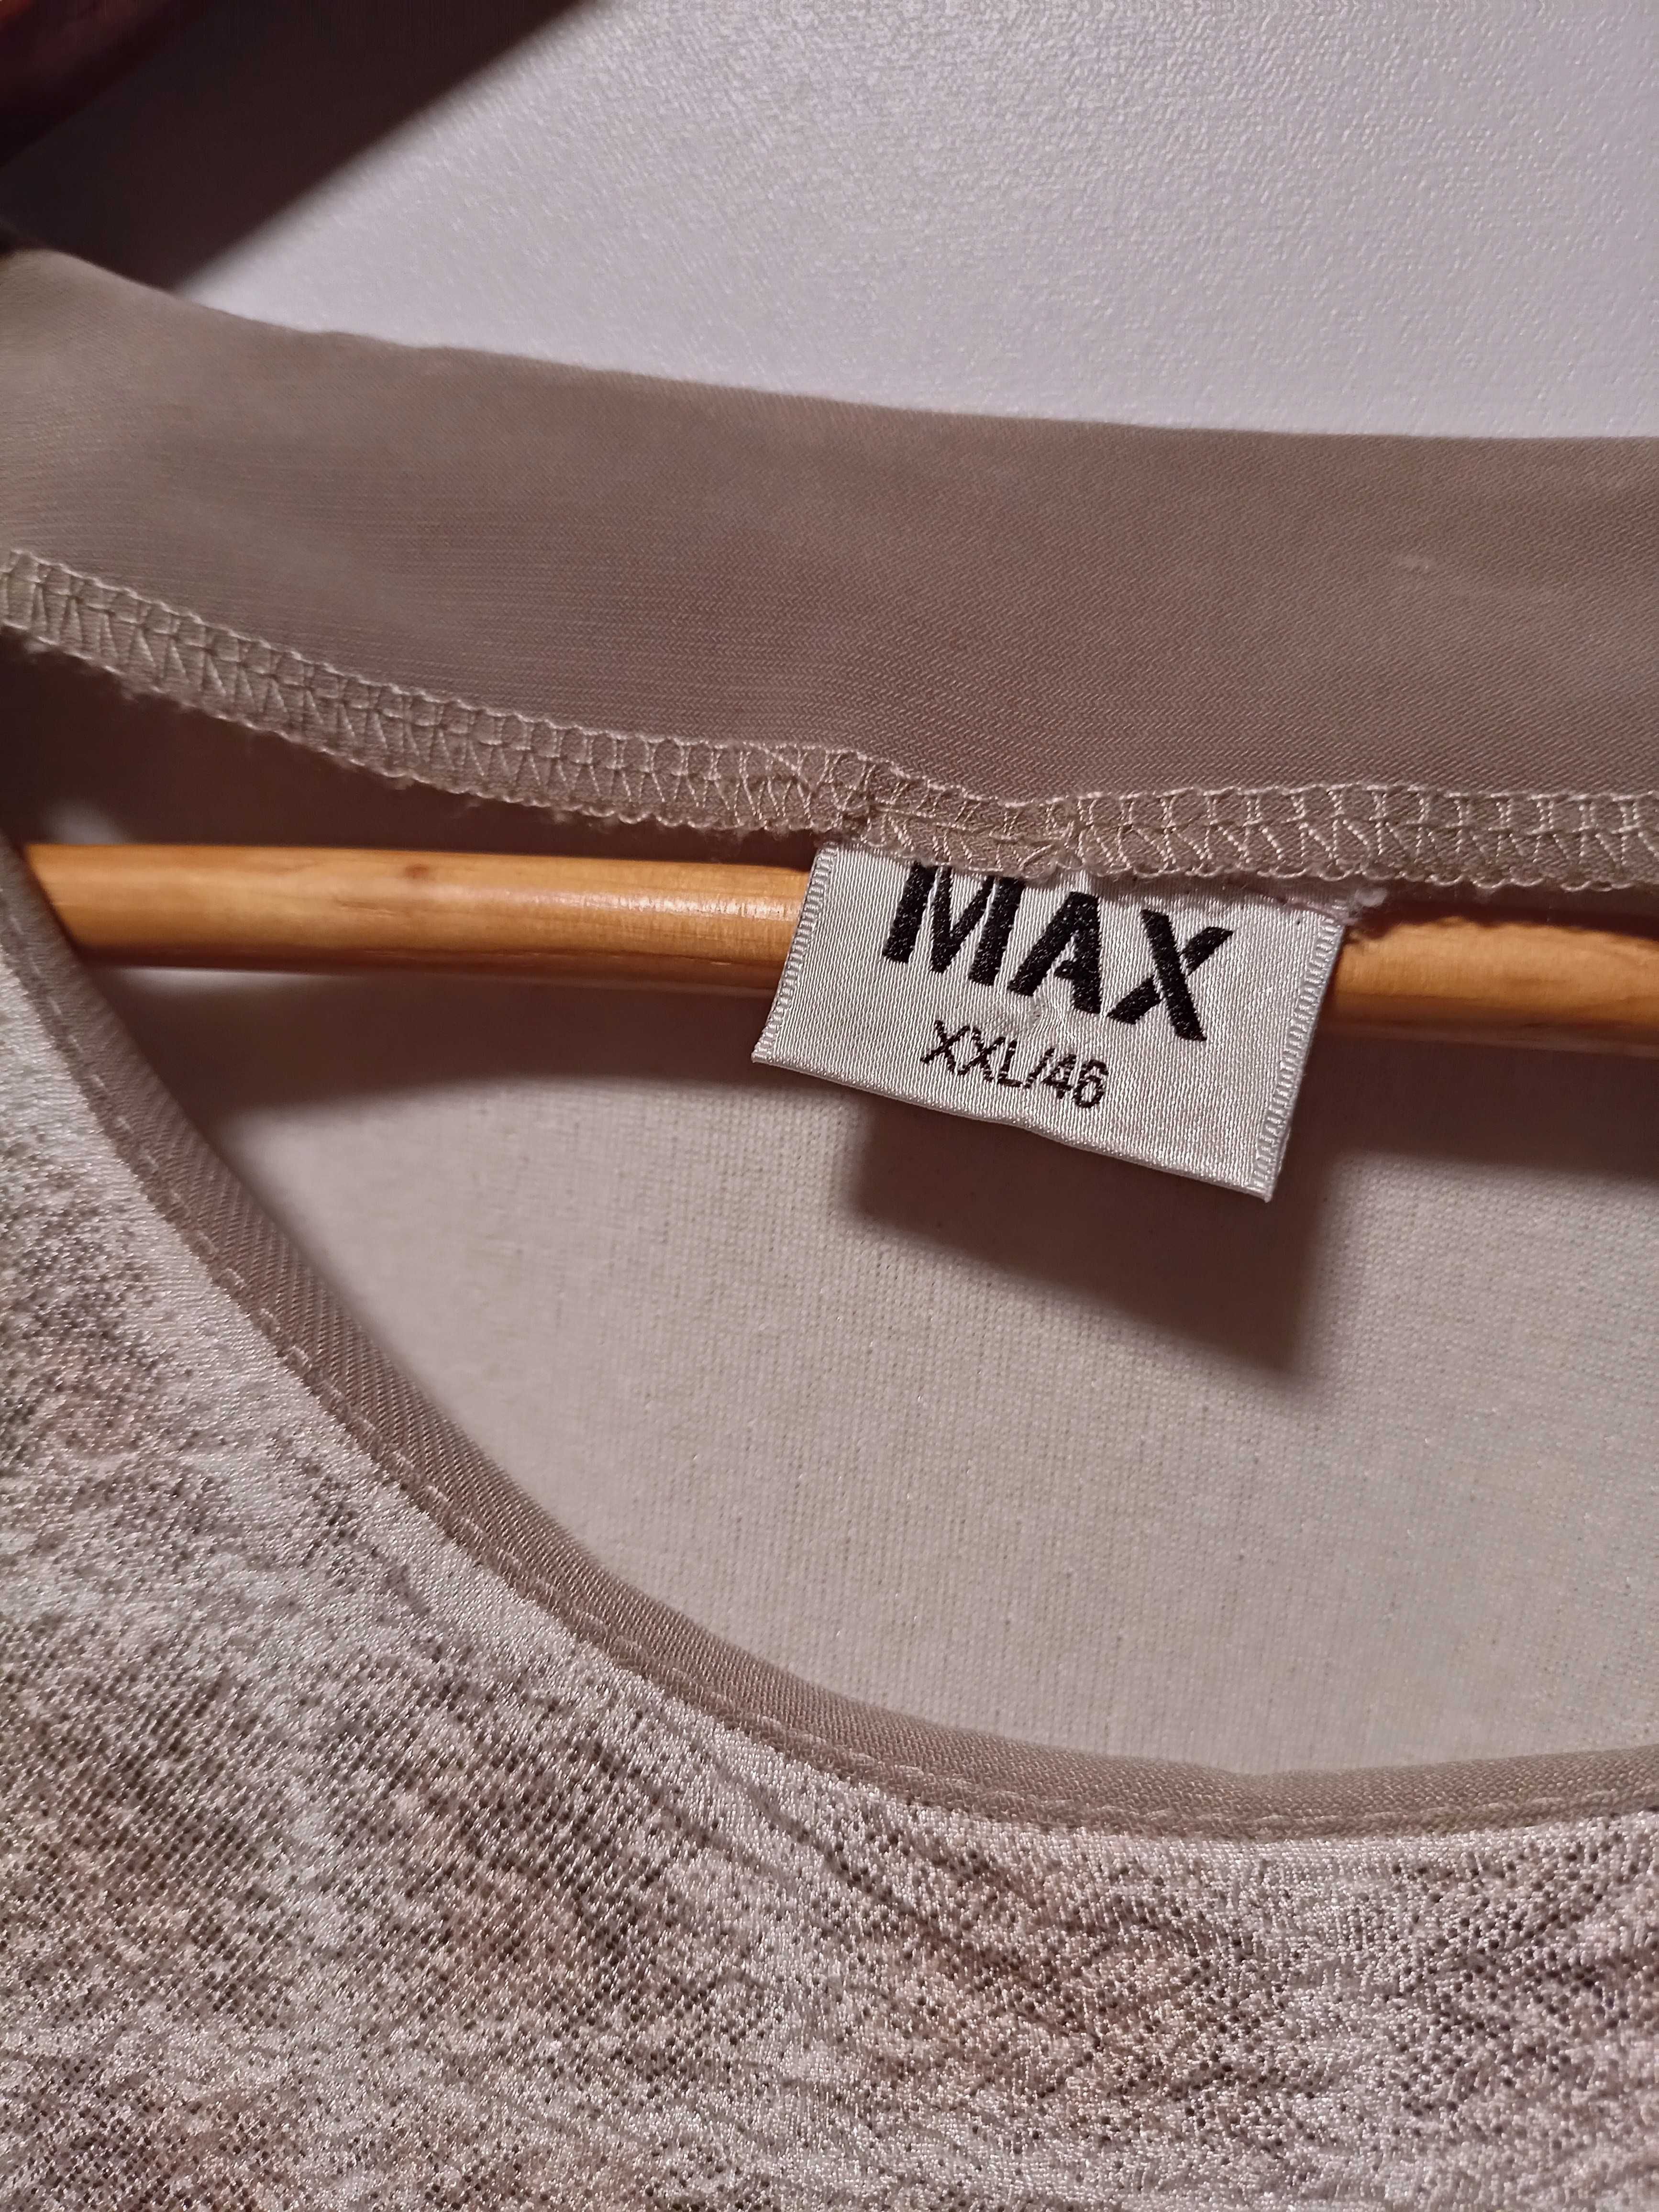 Elegancka bluzka MAX 42,44